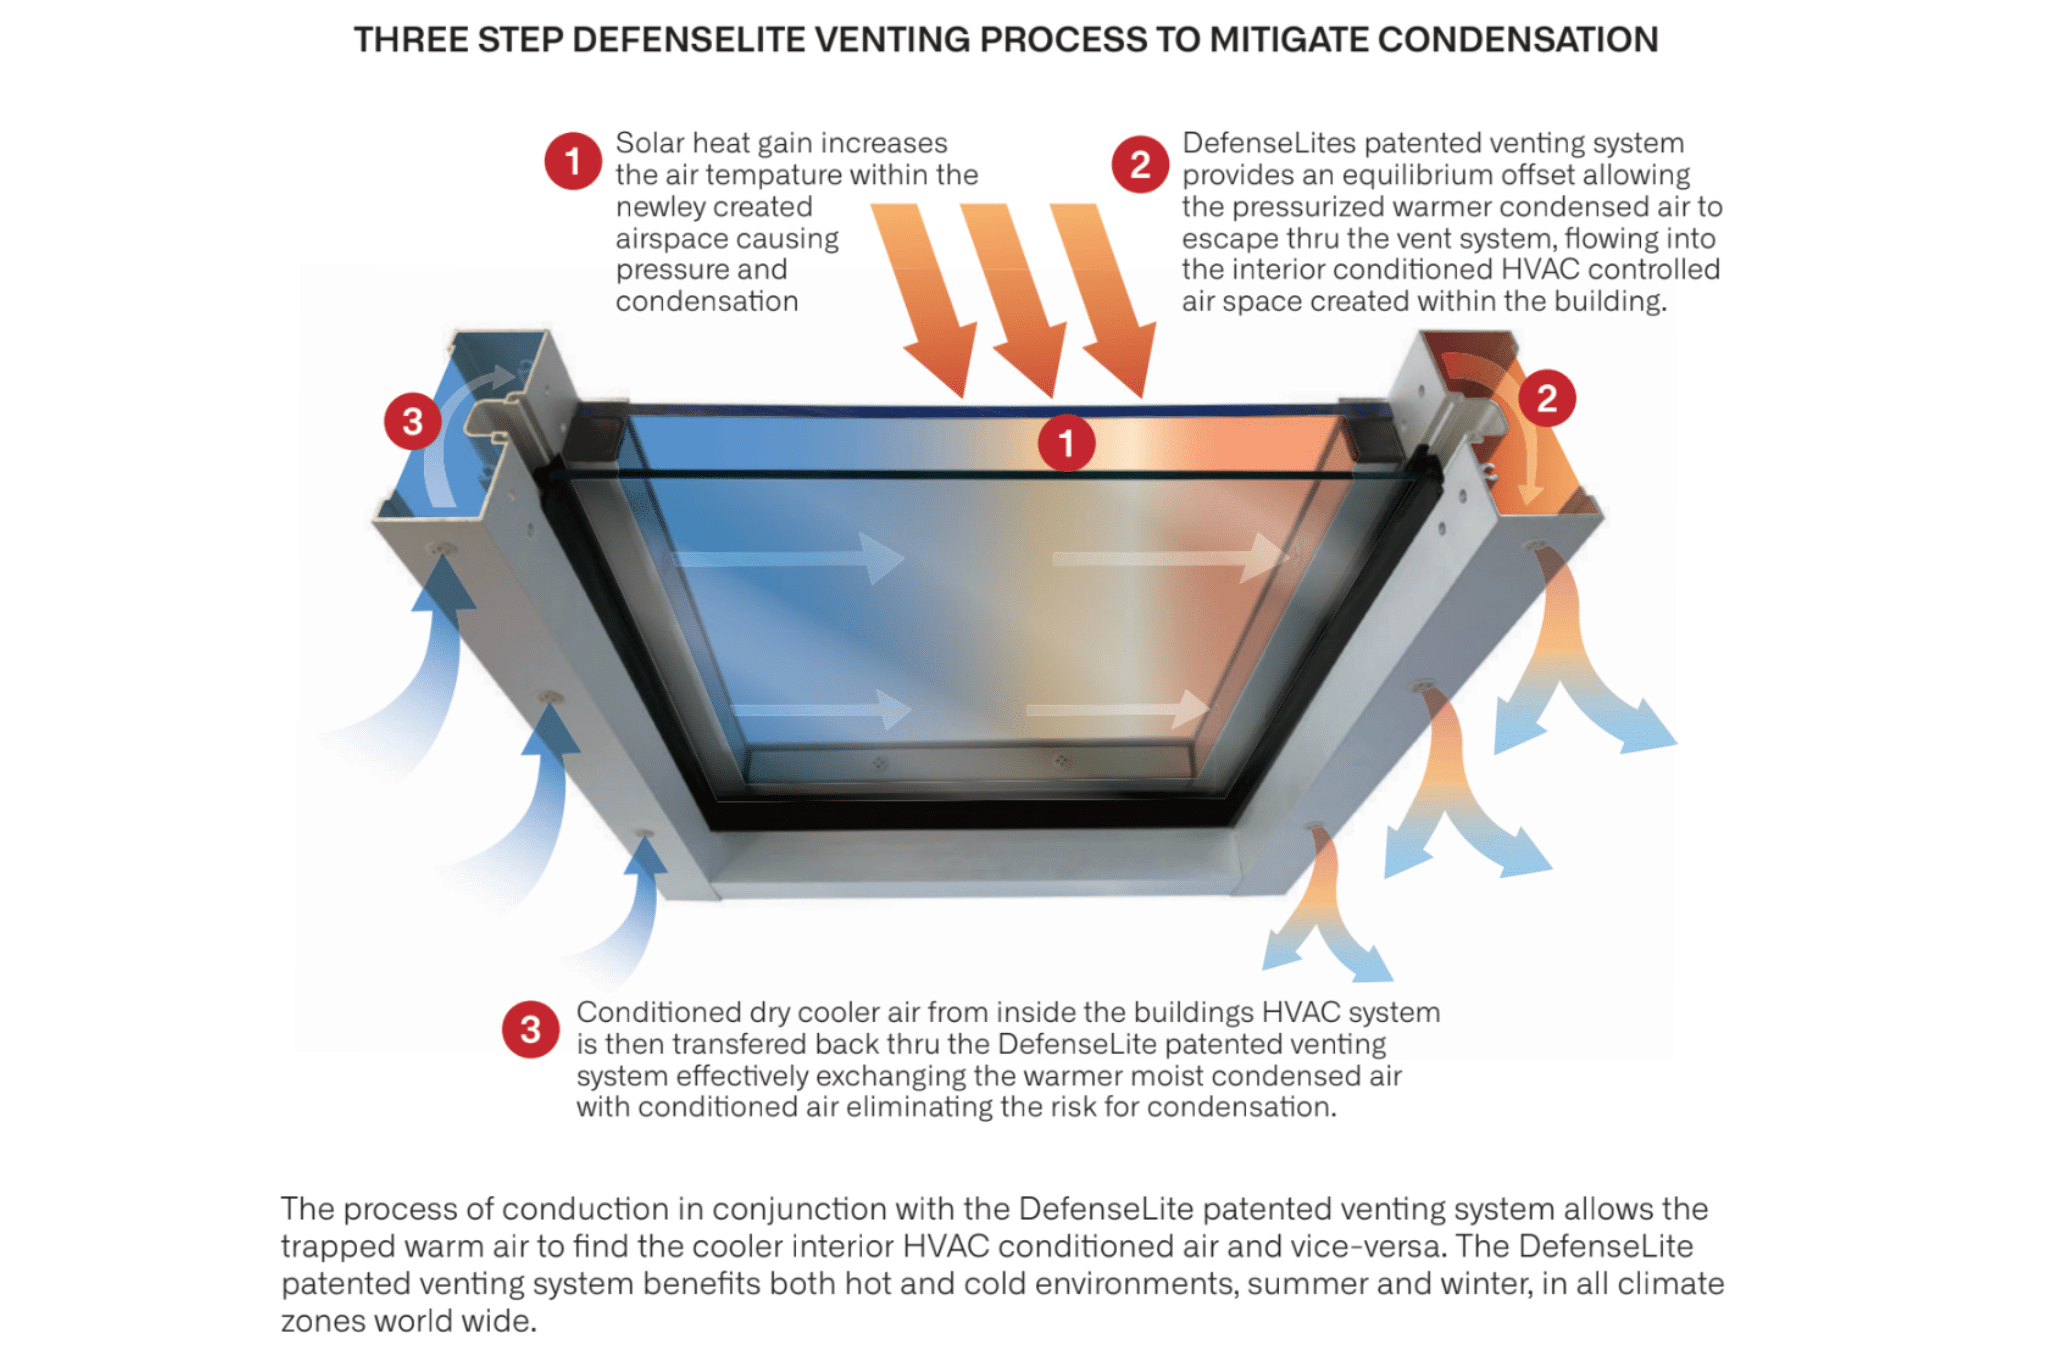 defenselite venting system reducing window condensation